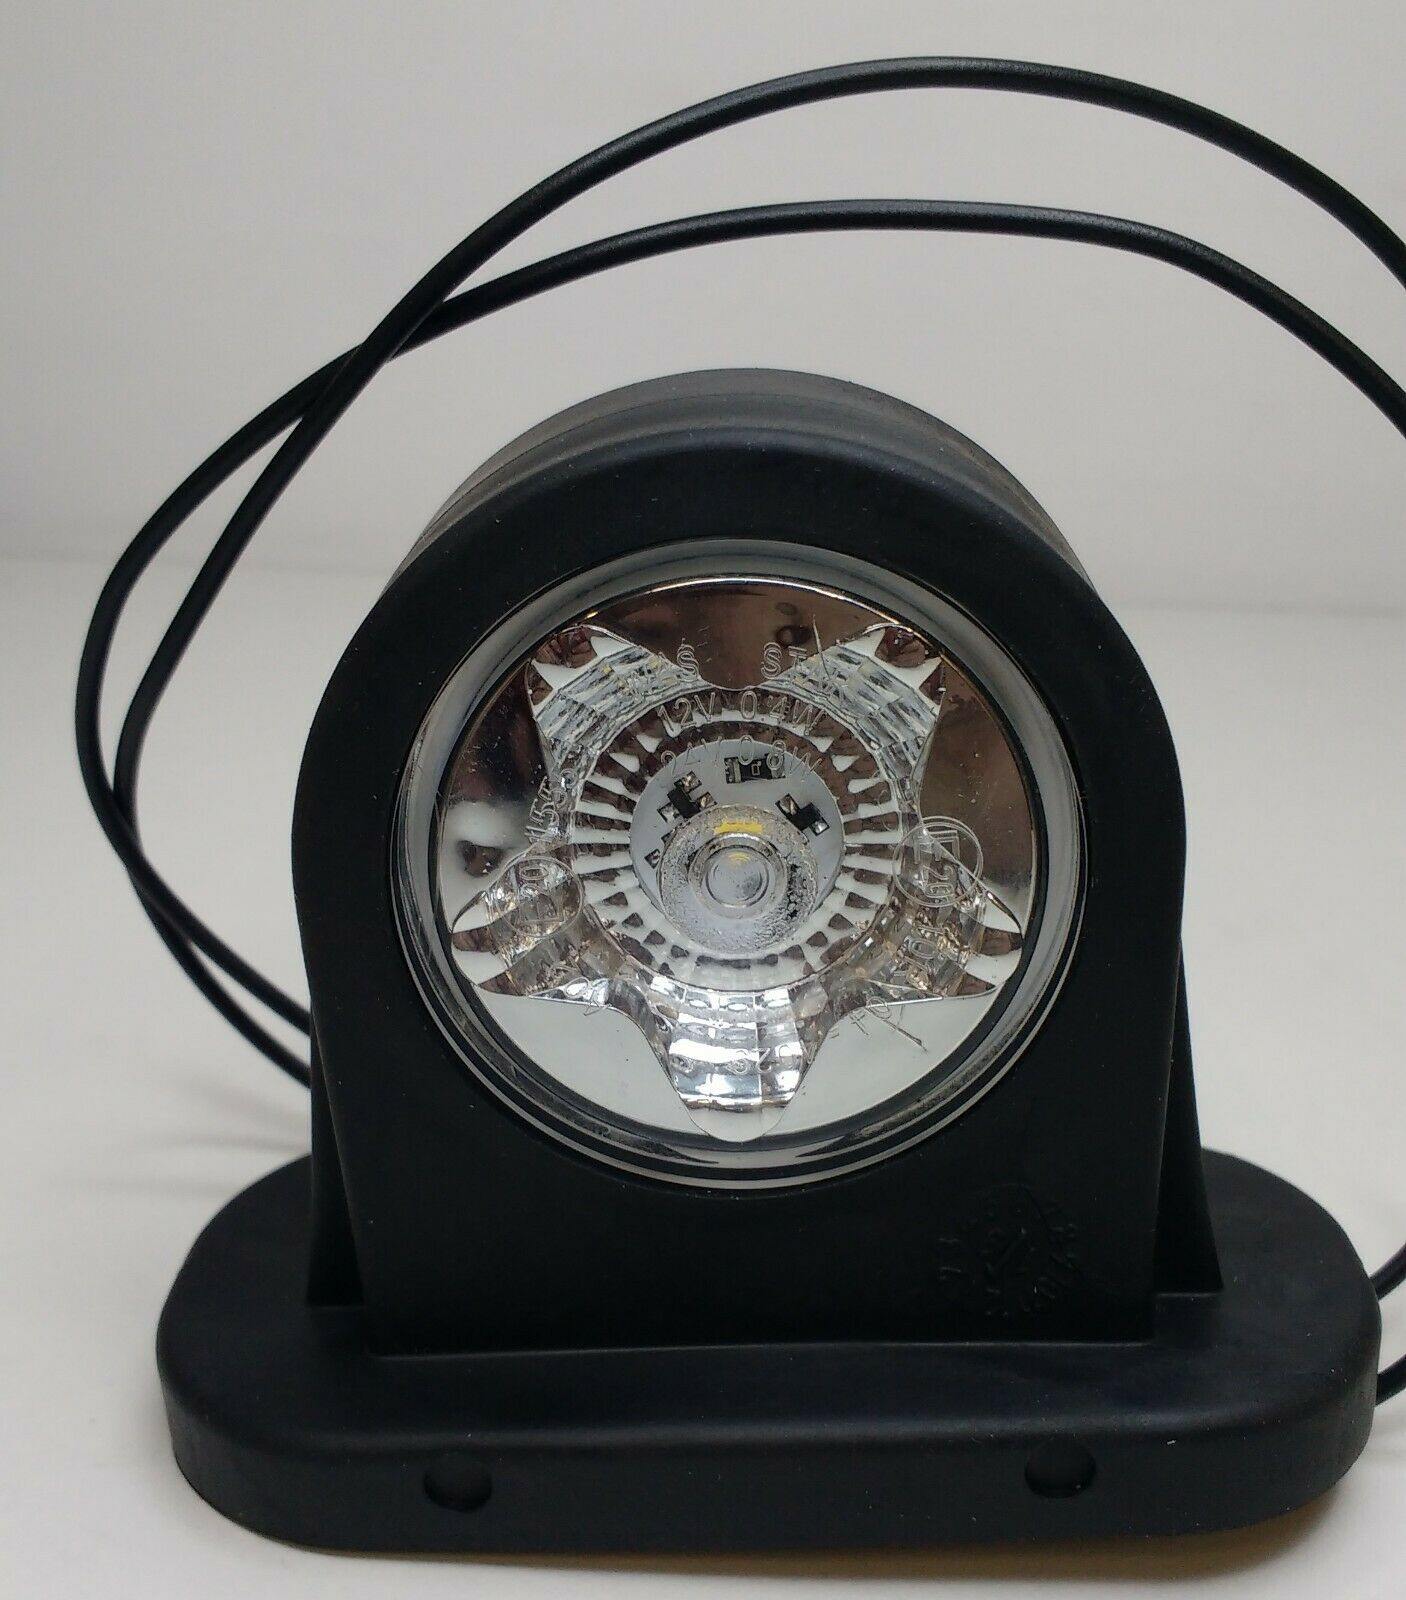 Flush Outline Marker Lamp Light Ip66 Rated White Red Maypole Was 12V 24V Mp8715B - Mid-Ulster Rotating Electrics Ltd